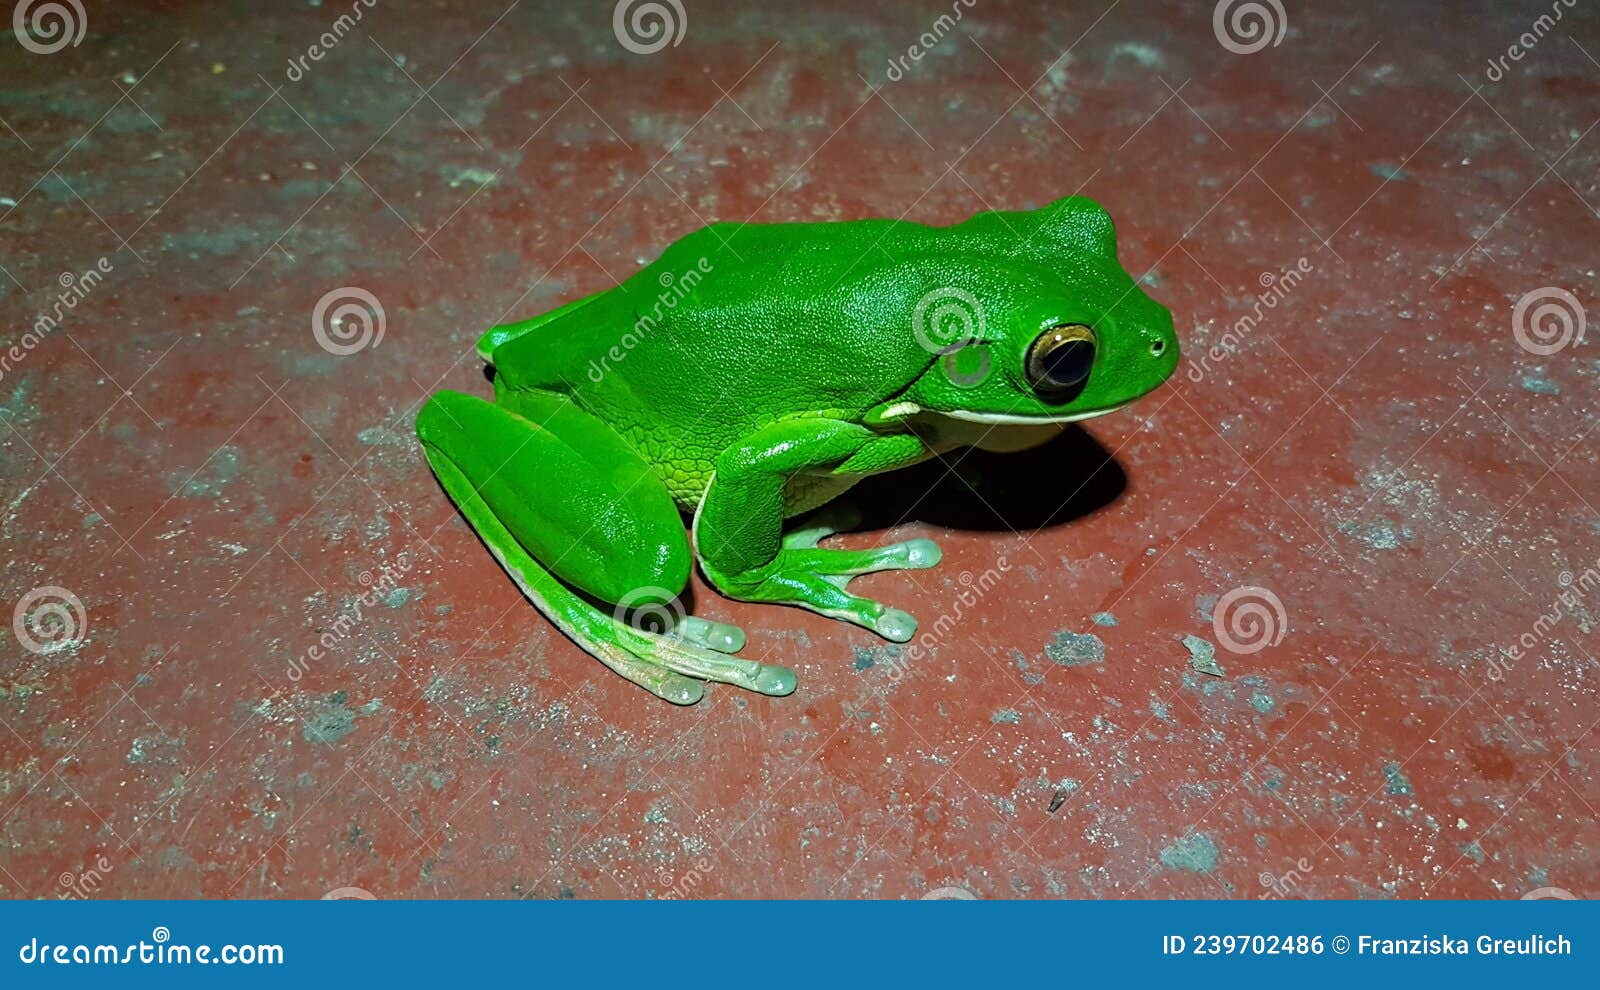 green frog on a toilet ground in australia